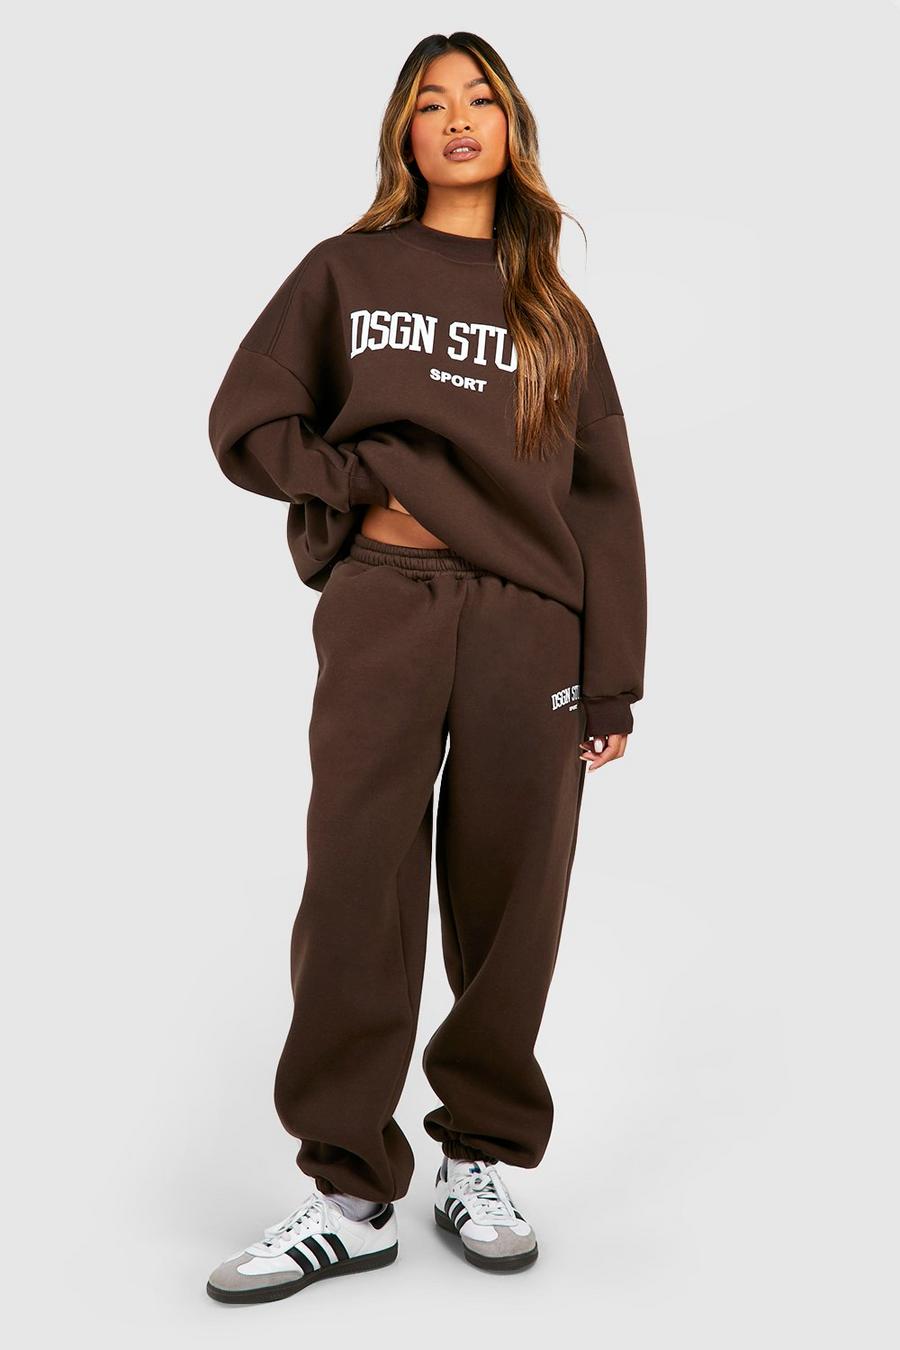 Sweatshirt-Trainingsanzug mit Dsgn Studio Slogan, Chocolate